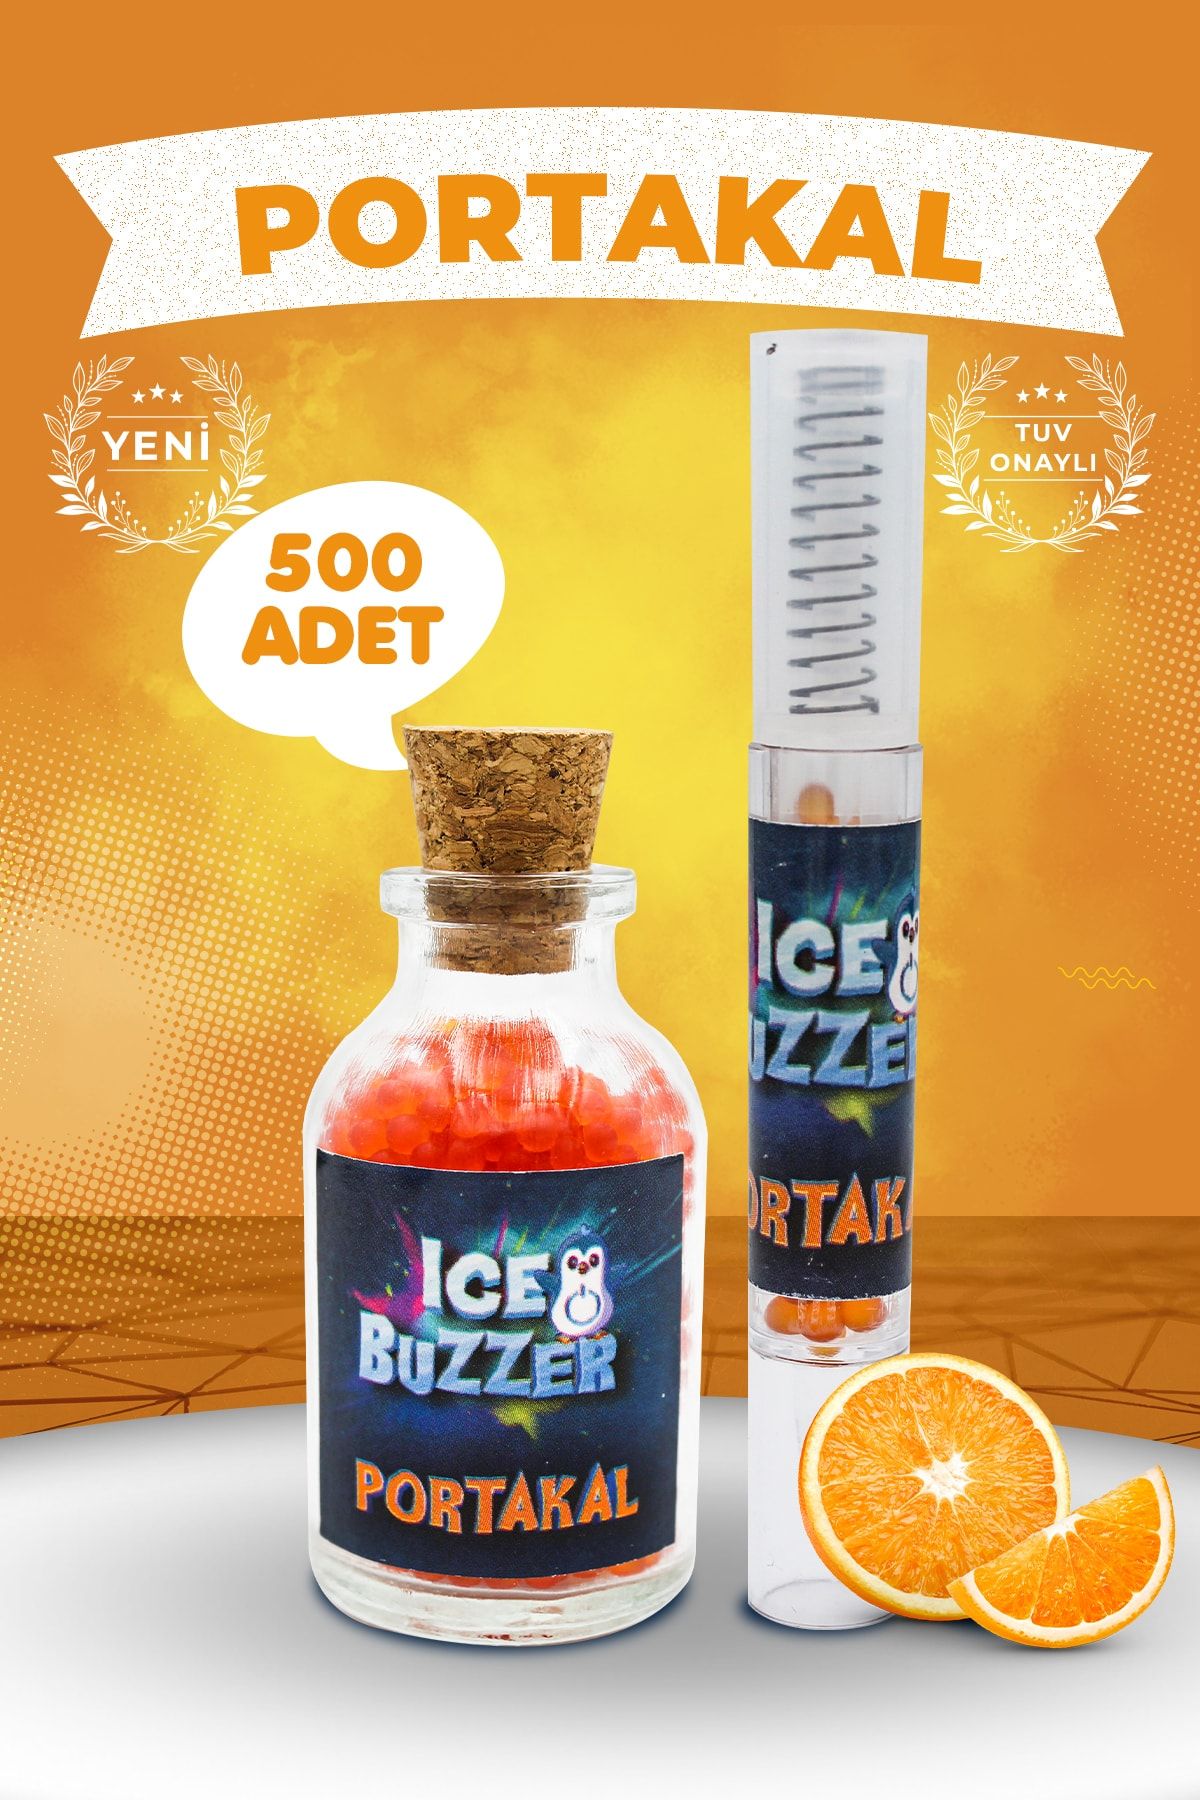 Crush Bomb Ice Buzzer Mentol Topu 500 Adet Portakal Aromalı+aplikatör